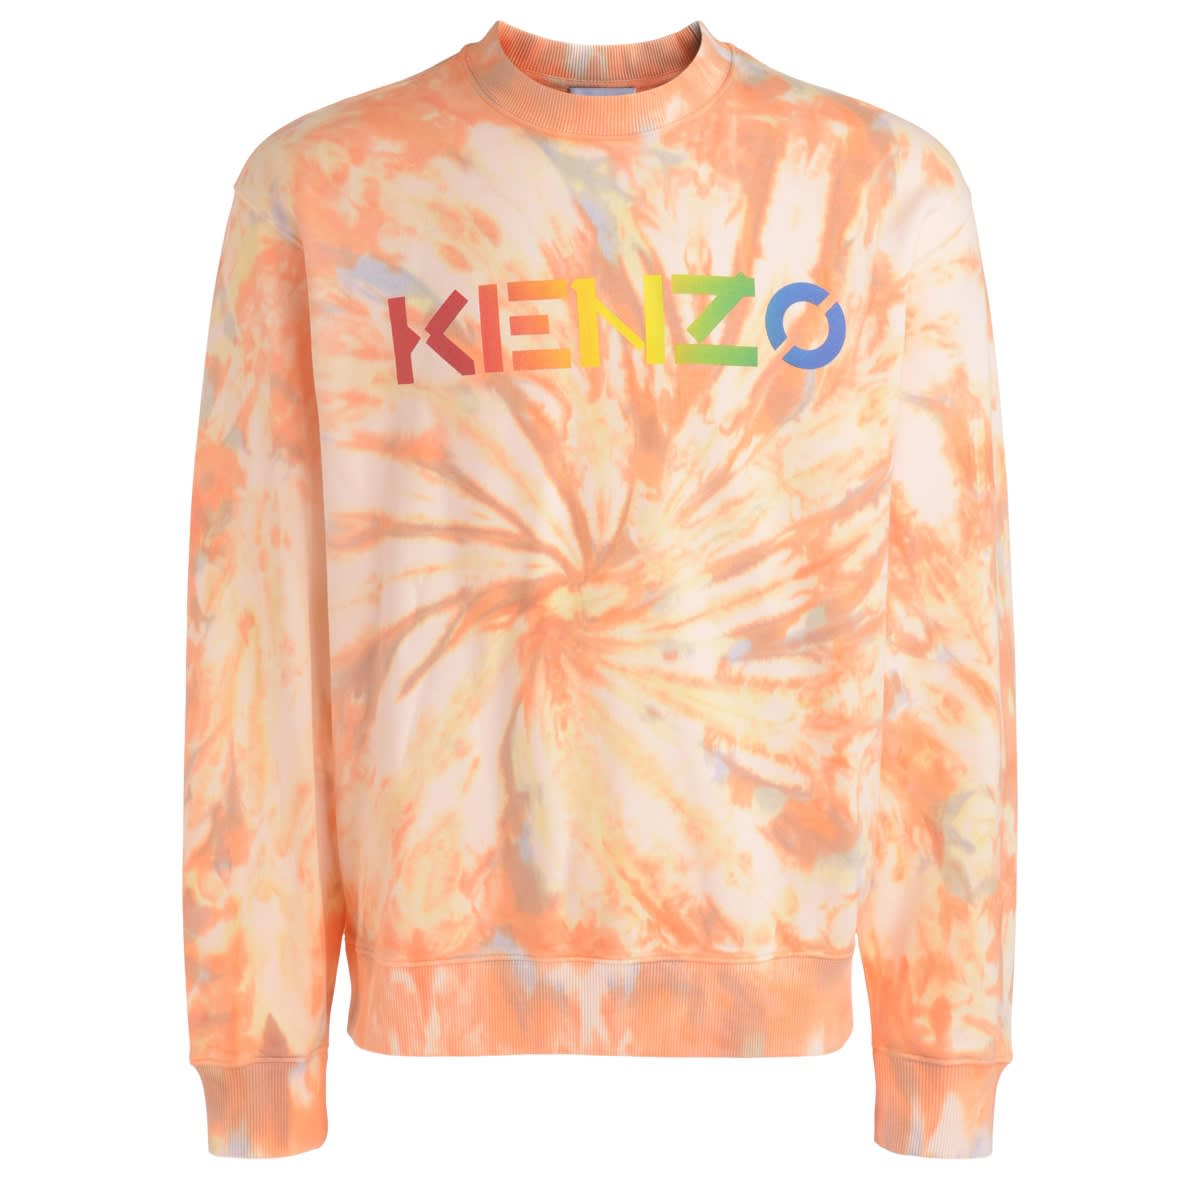 Kenzo Logo Tie-dye Orange Sweatshirt